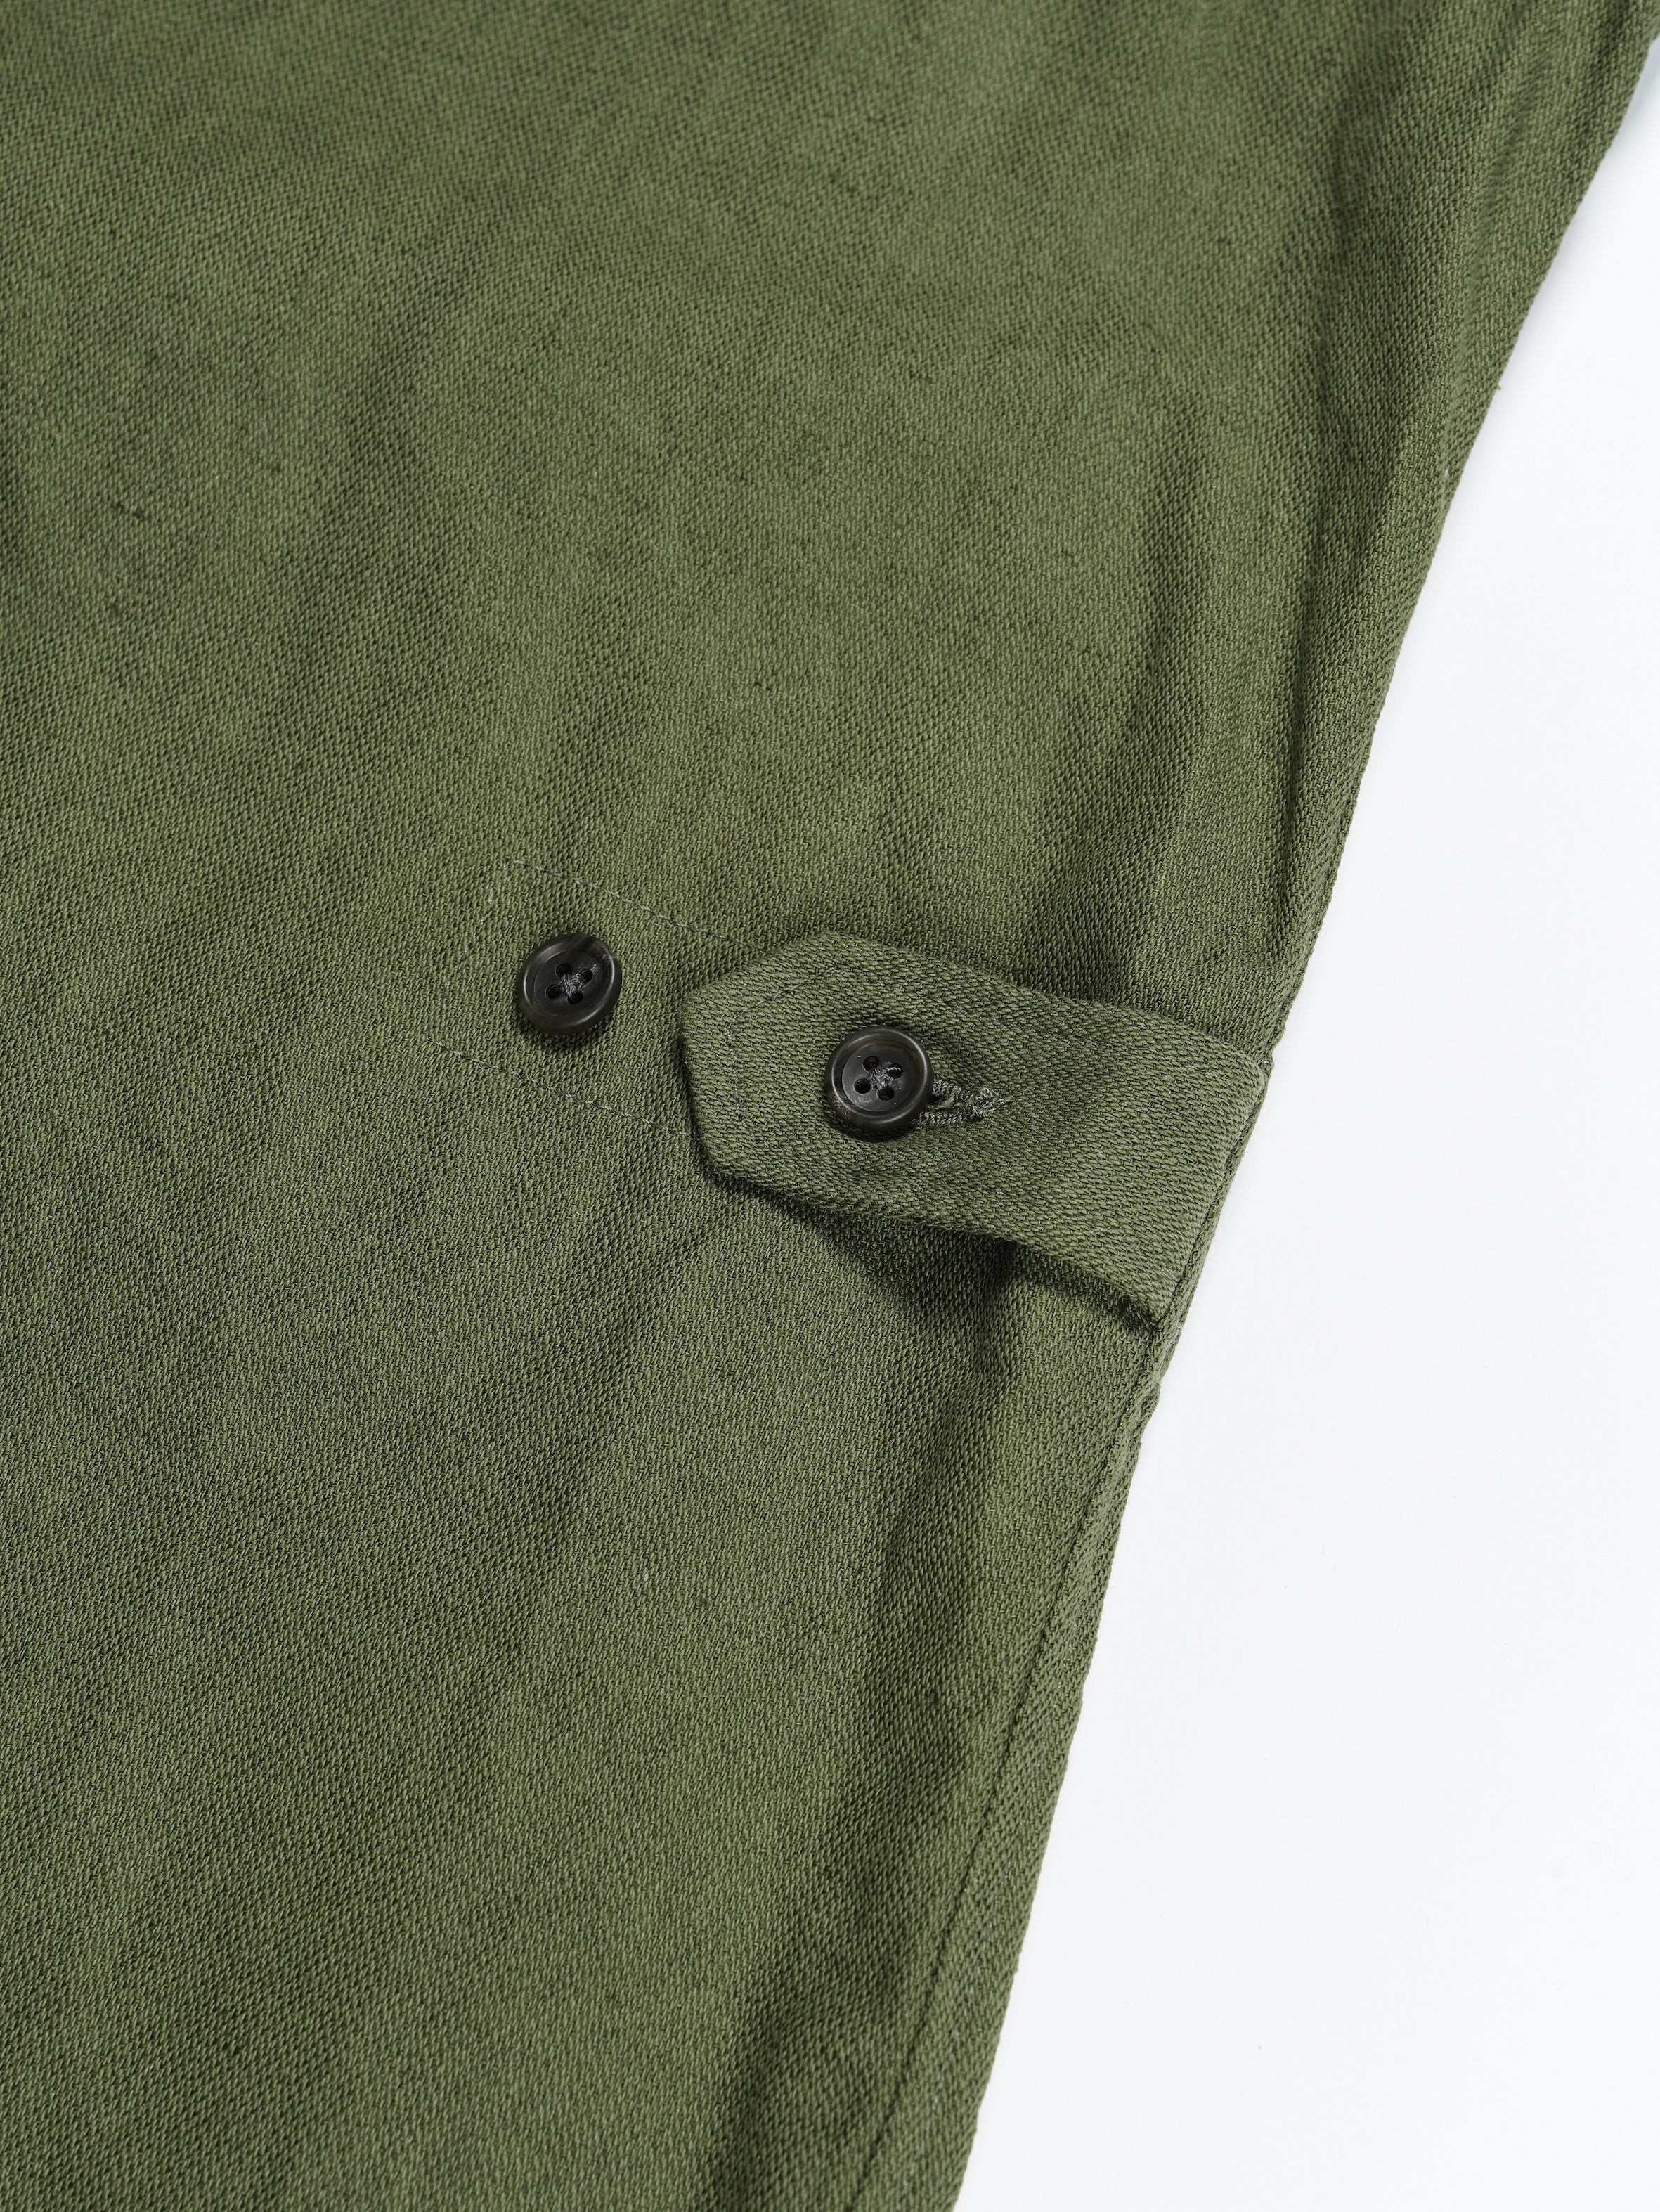 Engineered Garments Loiter Jacket - Olive Cotton Acetate Satin